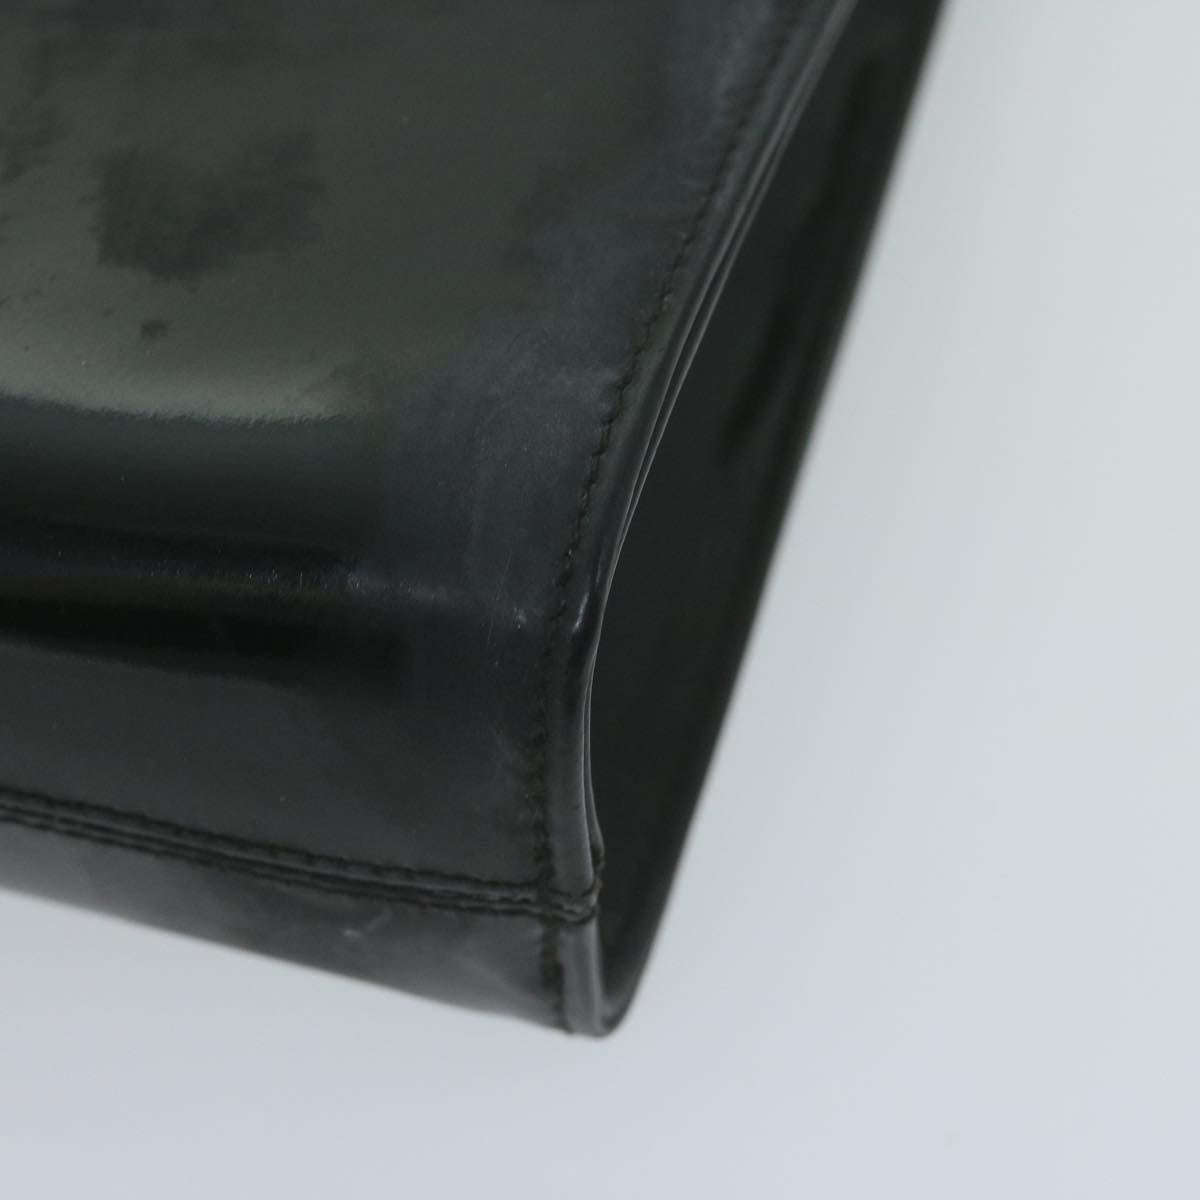 Salvatore Ferragamo Gancini Chain Shoulder Bag patent Black Auth 65882